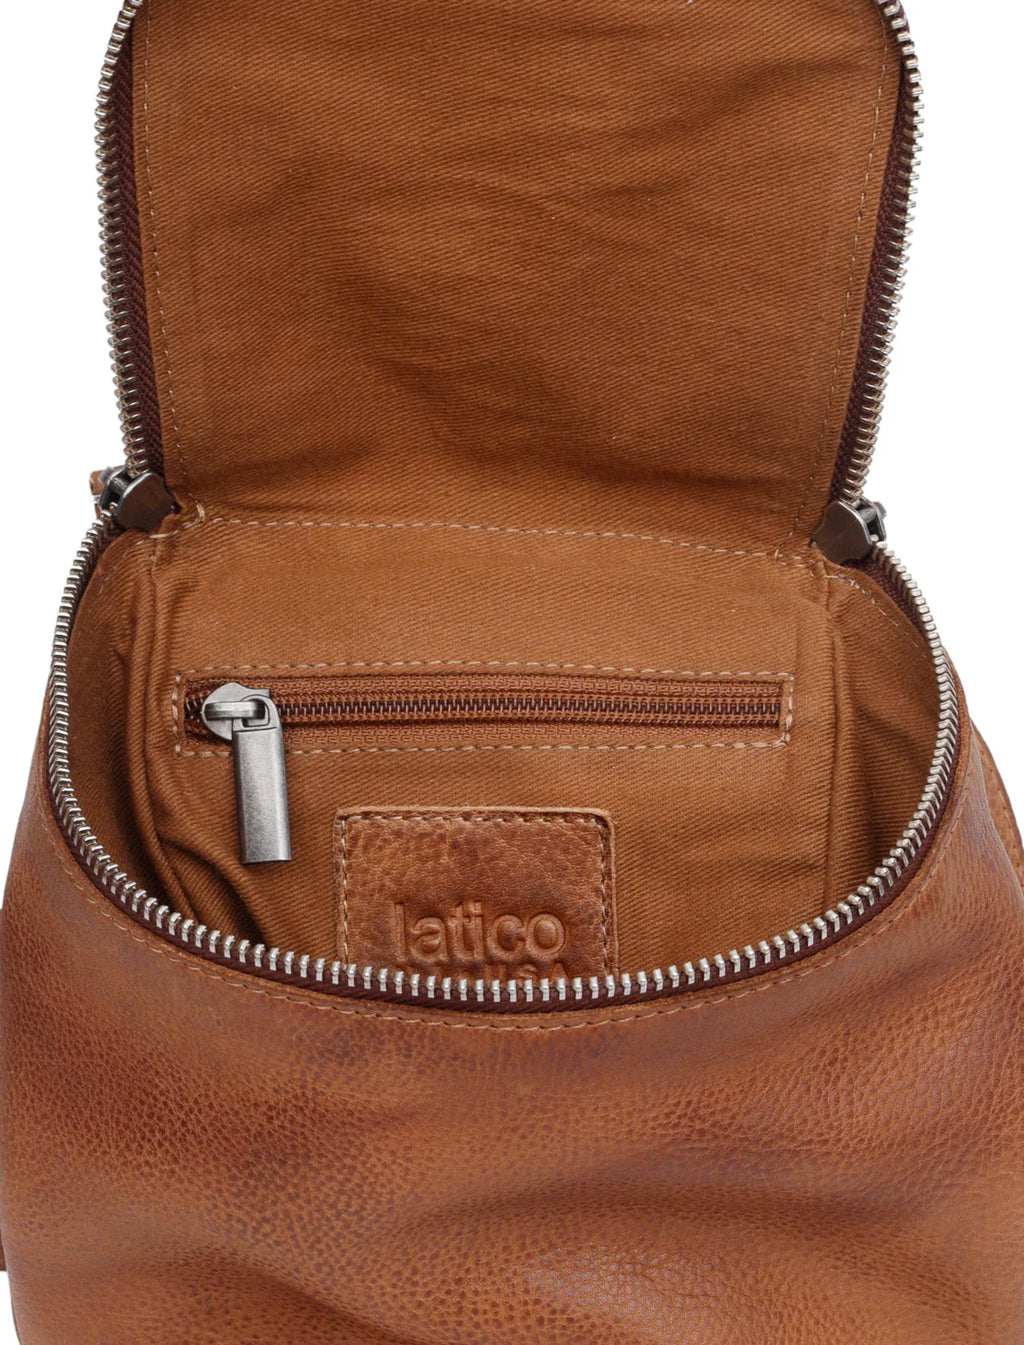 Latico Leathers Marlow Handbag, Cognac One Size Cognac